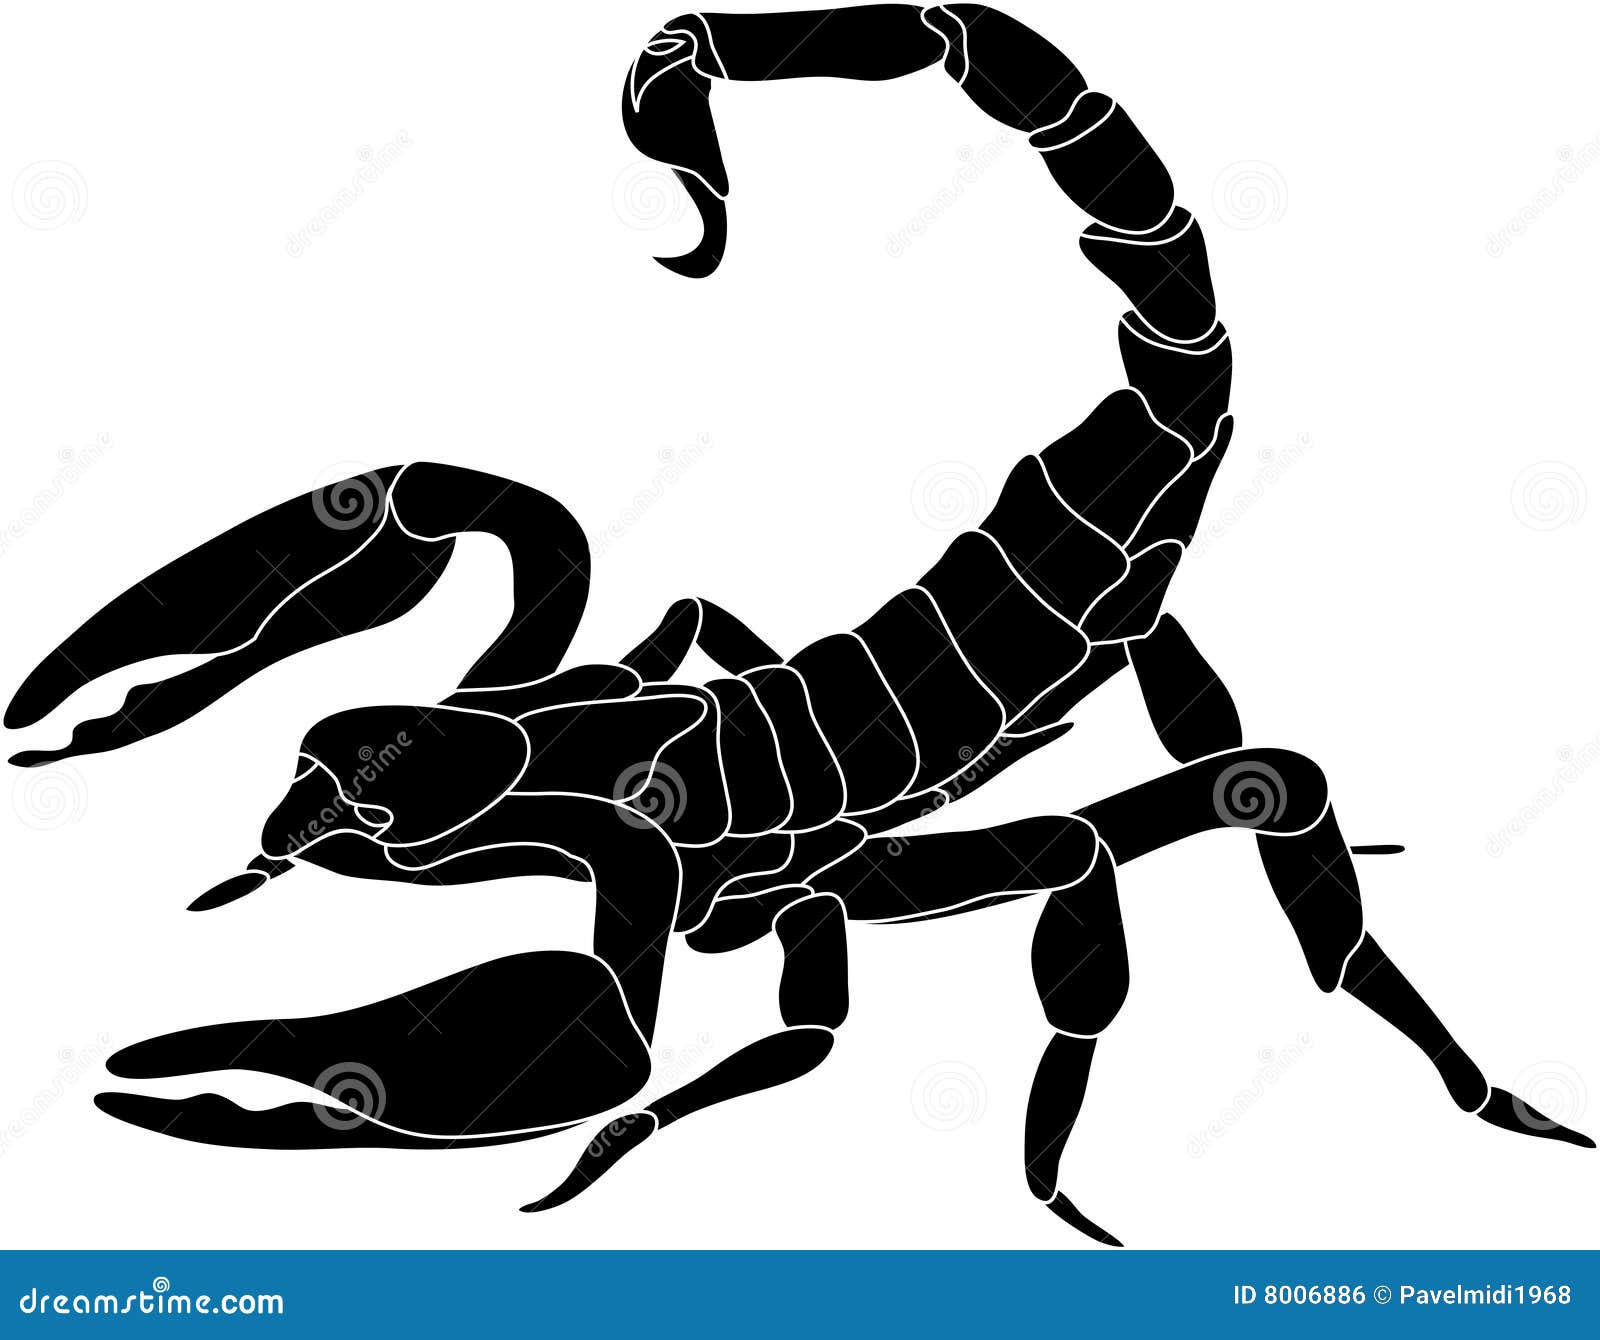 Scorpion Royalty Free Stock Image - Image: 8006886